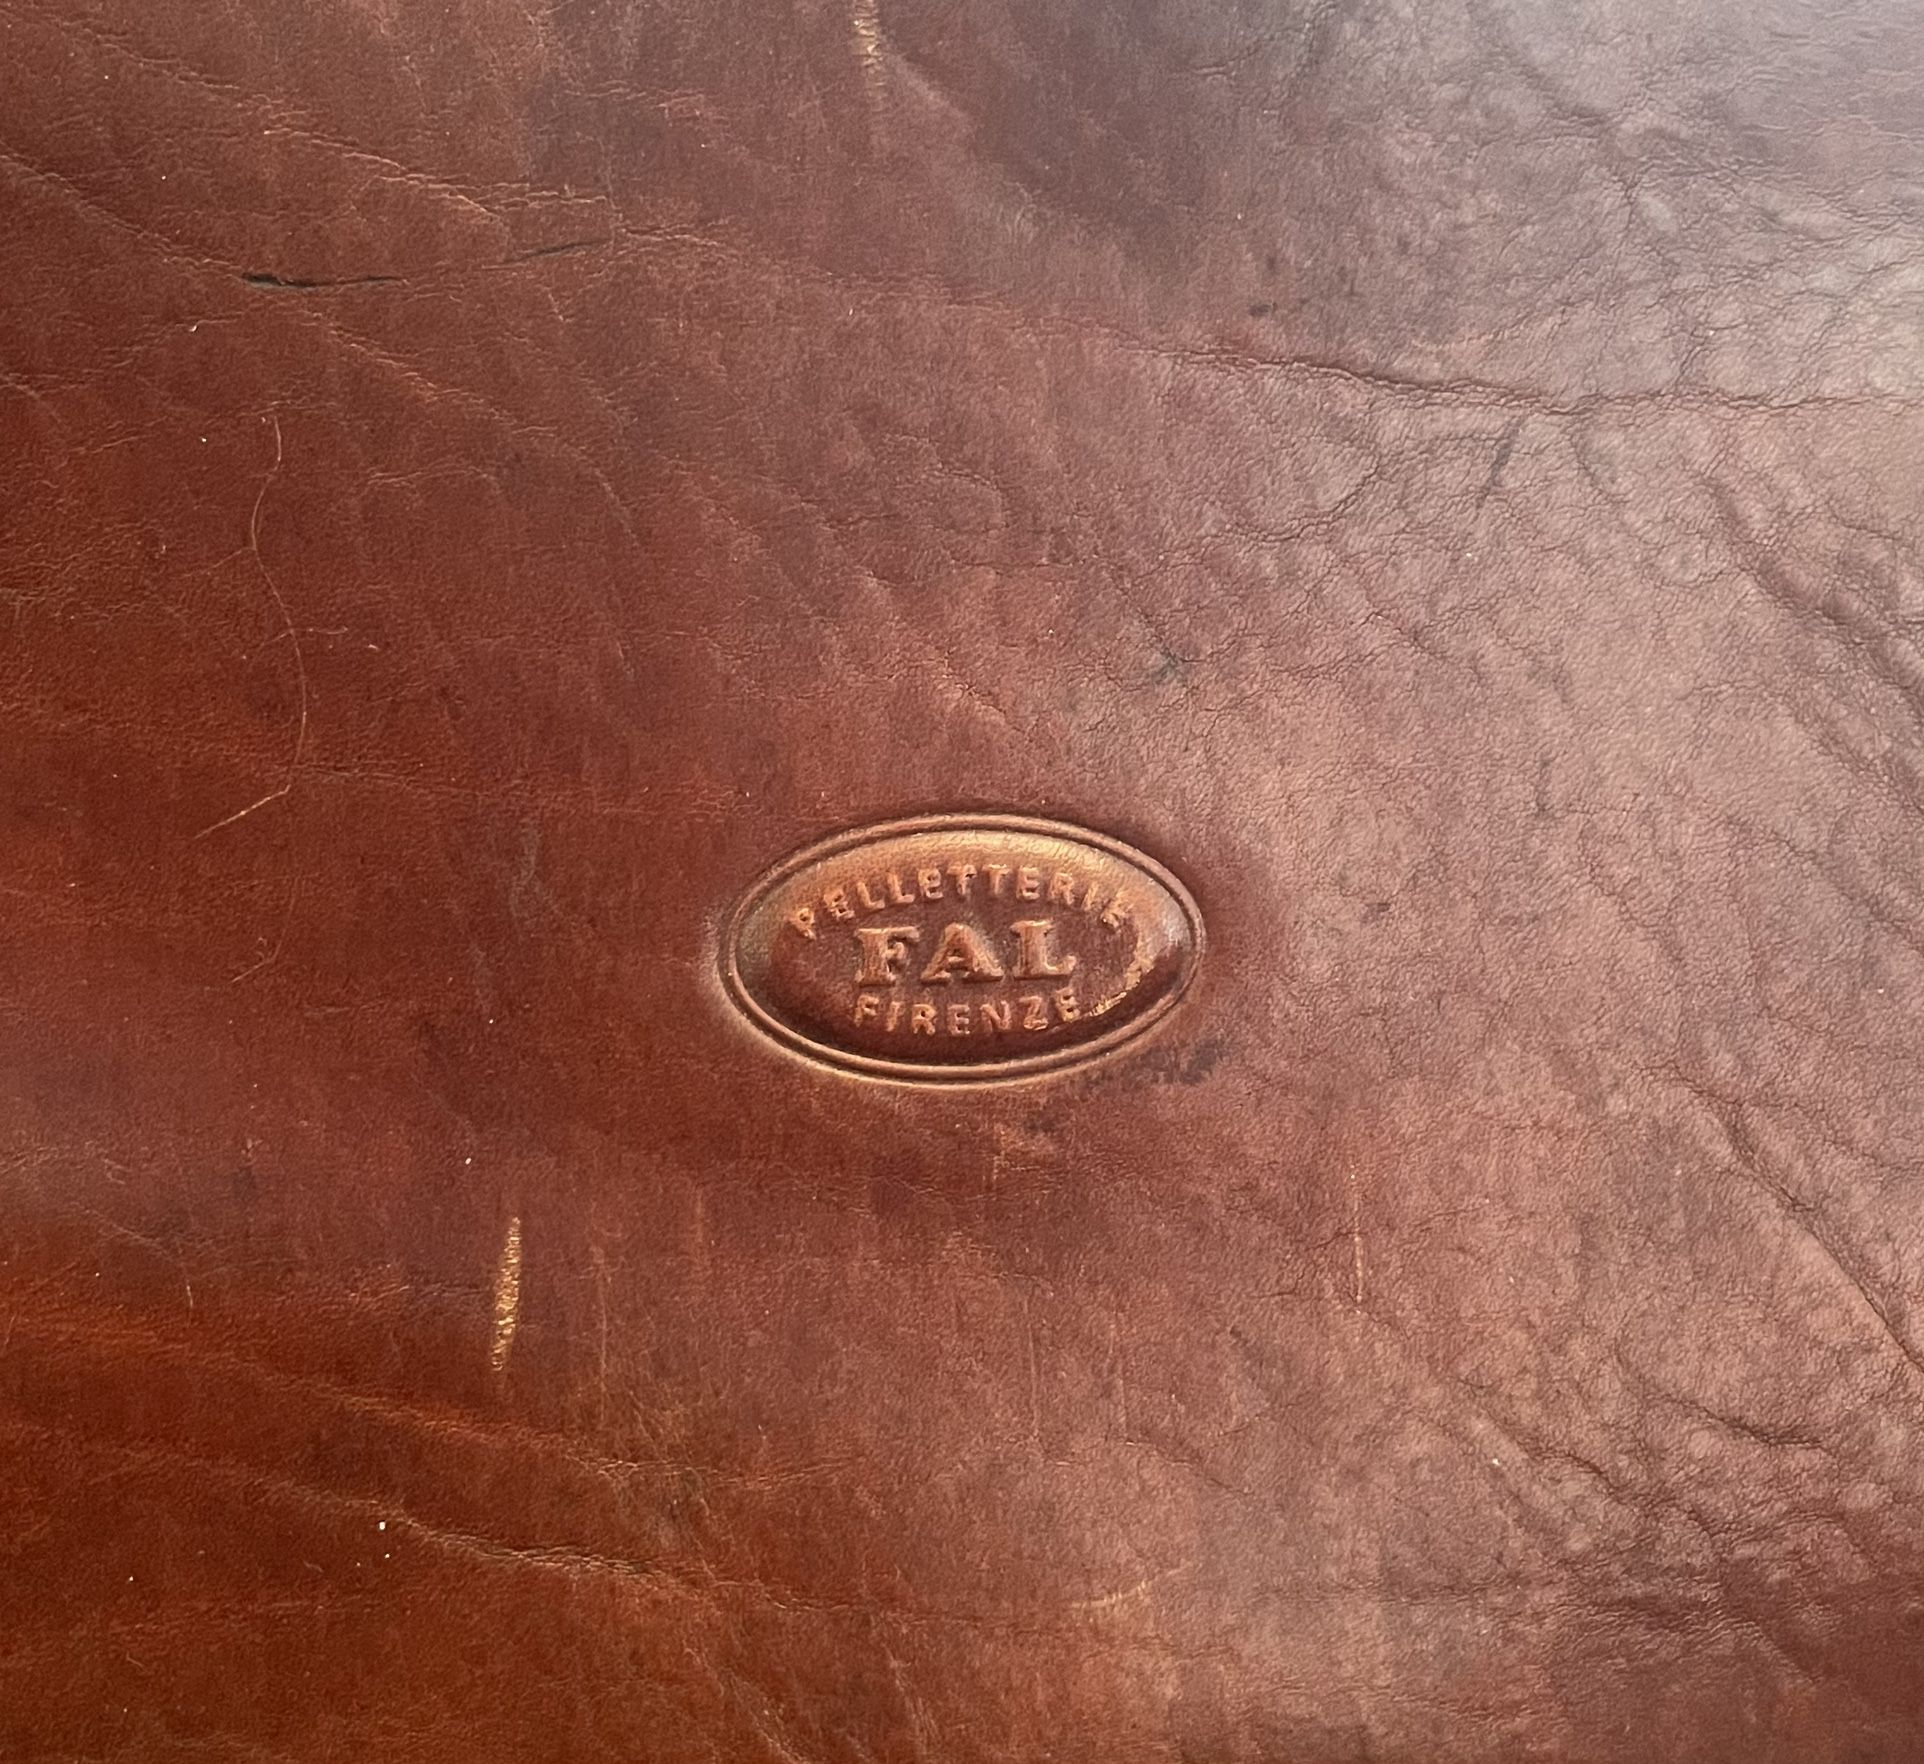 Pelletterie Firenze - Authentic Italian Leather Purse